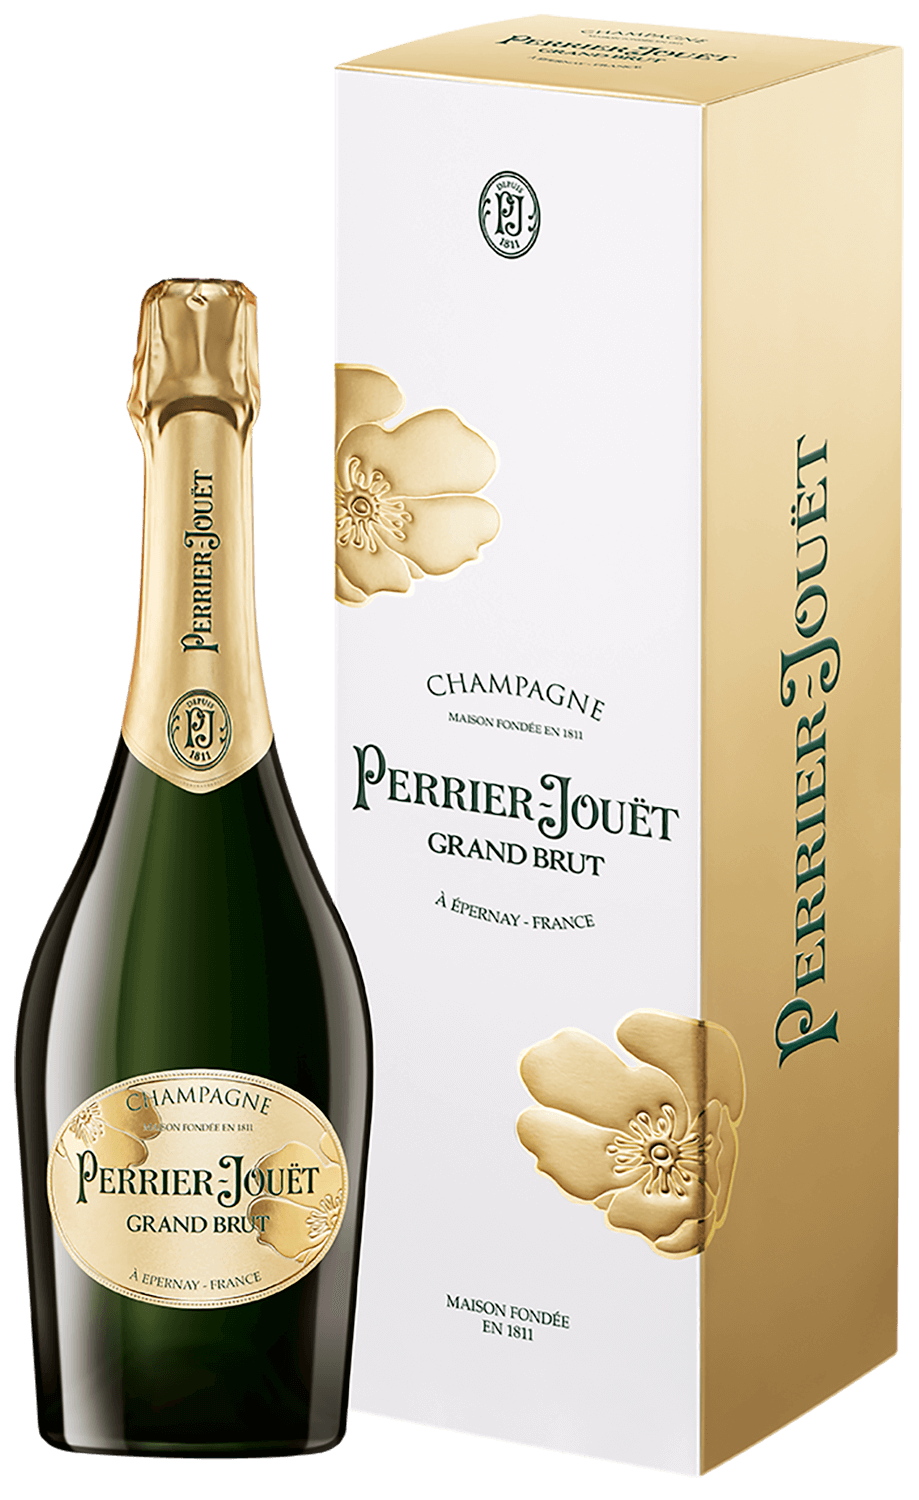 Perrier-Jouёt Grand Brut Champagne AOC (gift box) taittinger prelude grand cru brut champagne aoc gift box